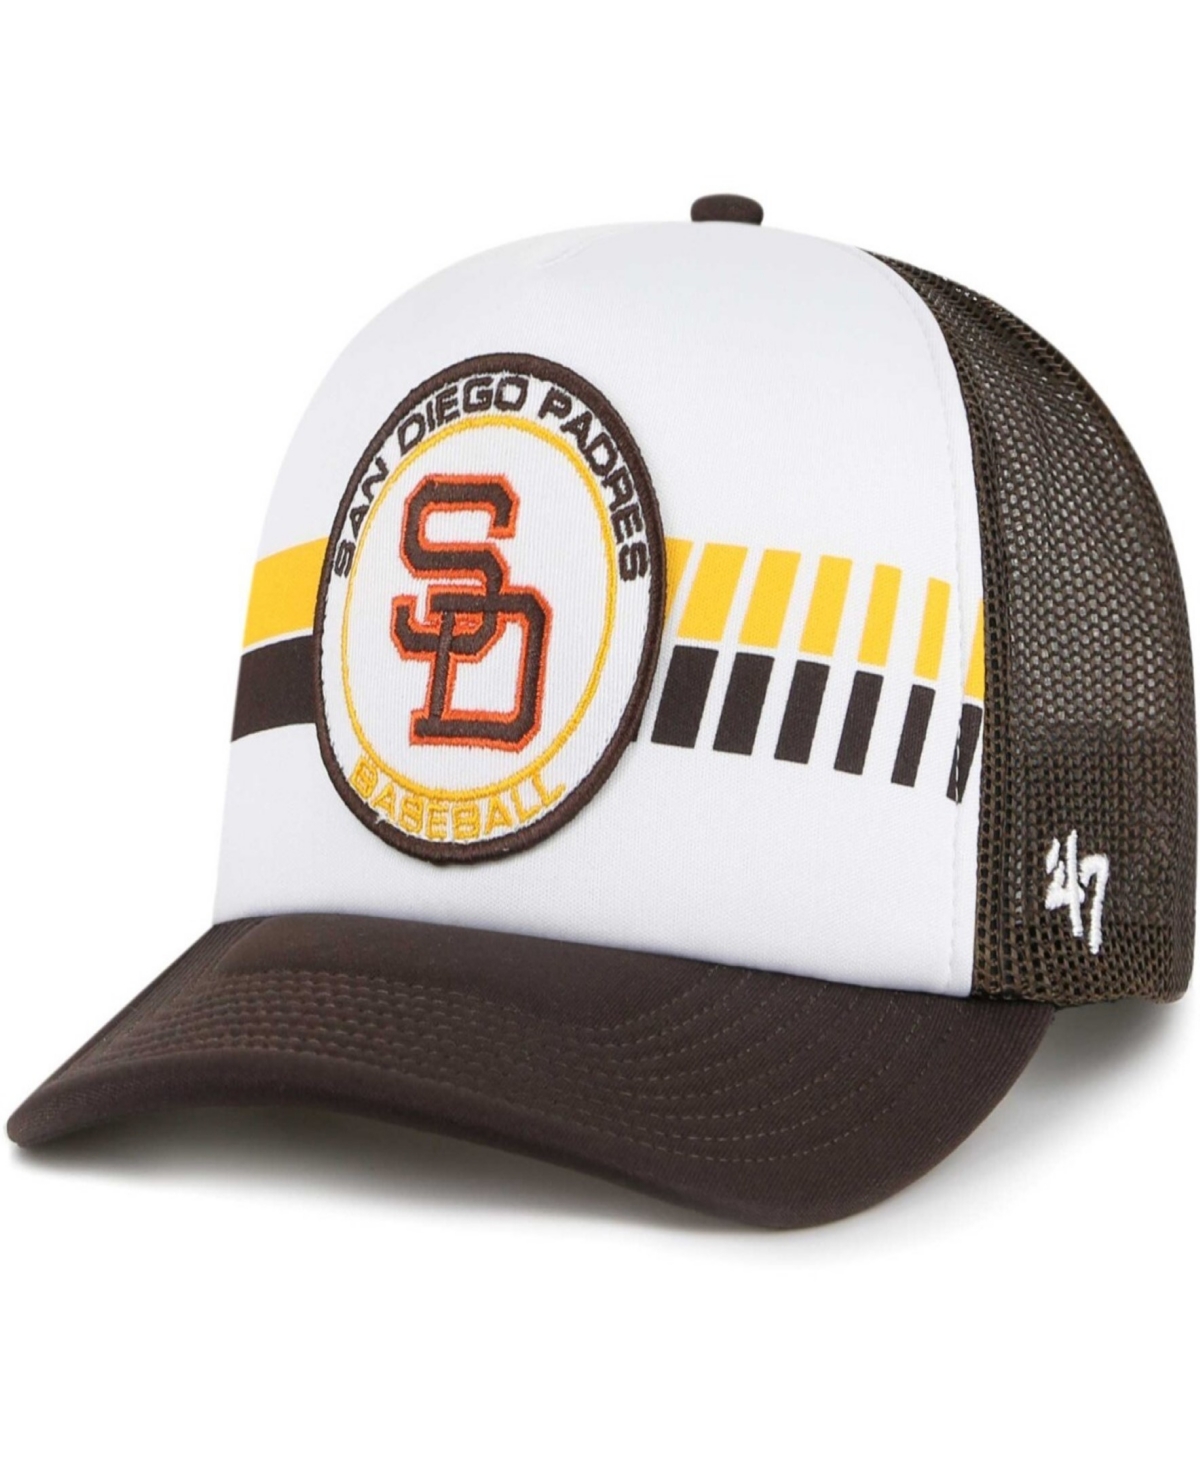 47 Brand Men's Brown San Diego Padres Cooperstown Collection Wax Pack Express Trucker Adjustable Hat - Brown